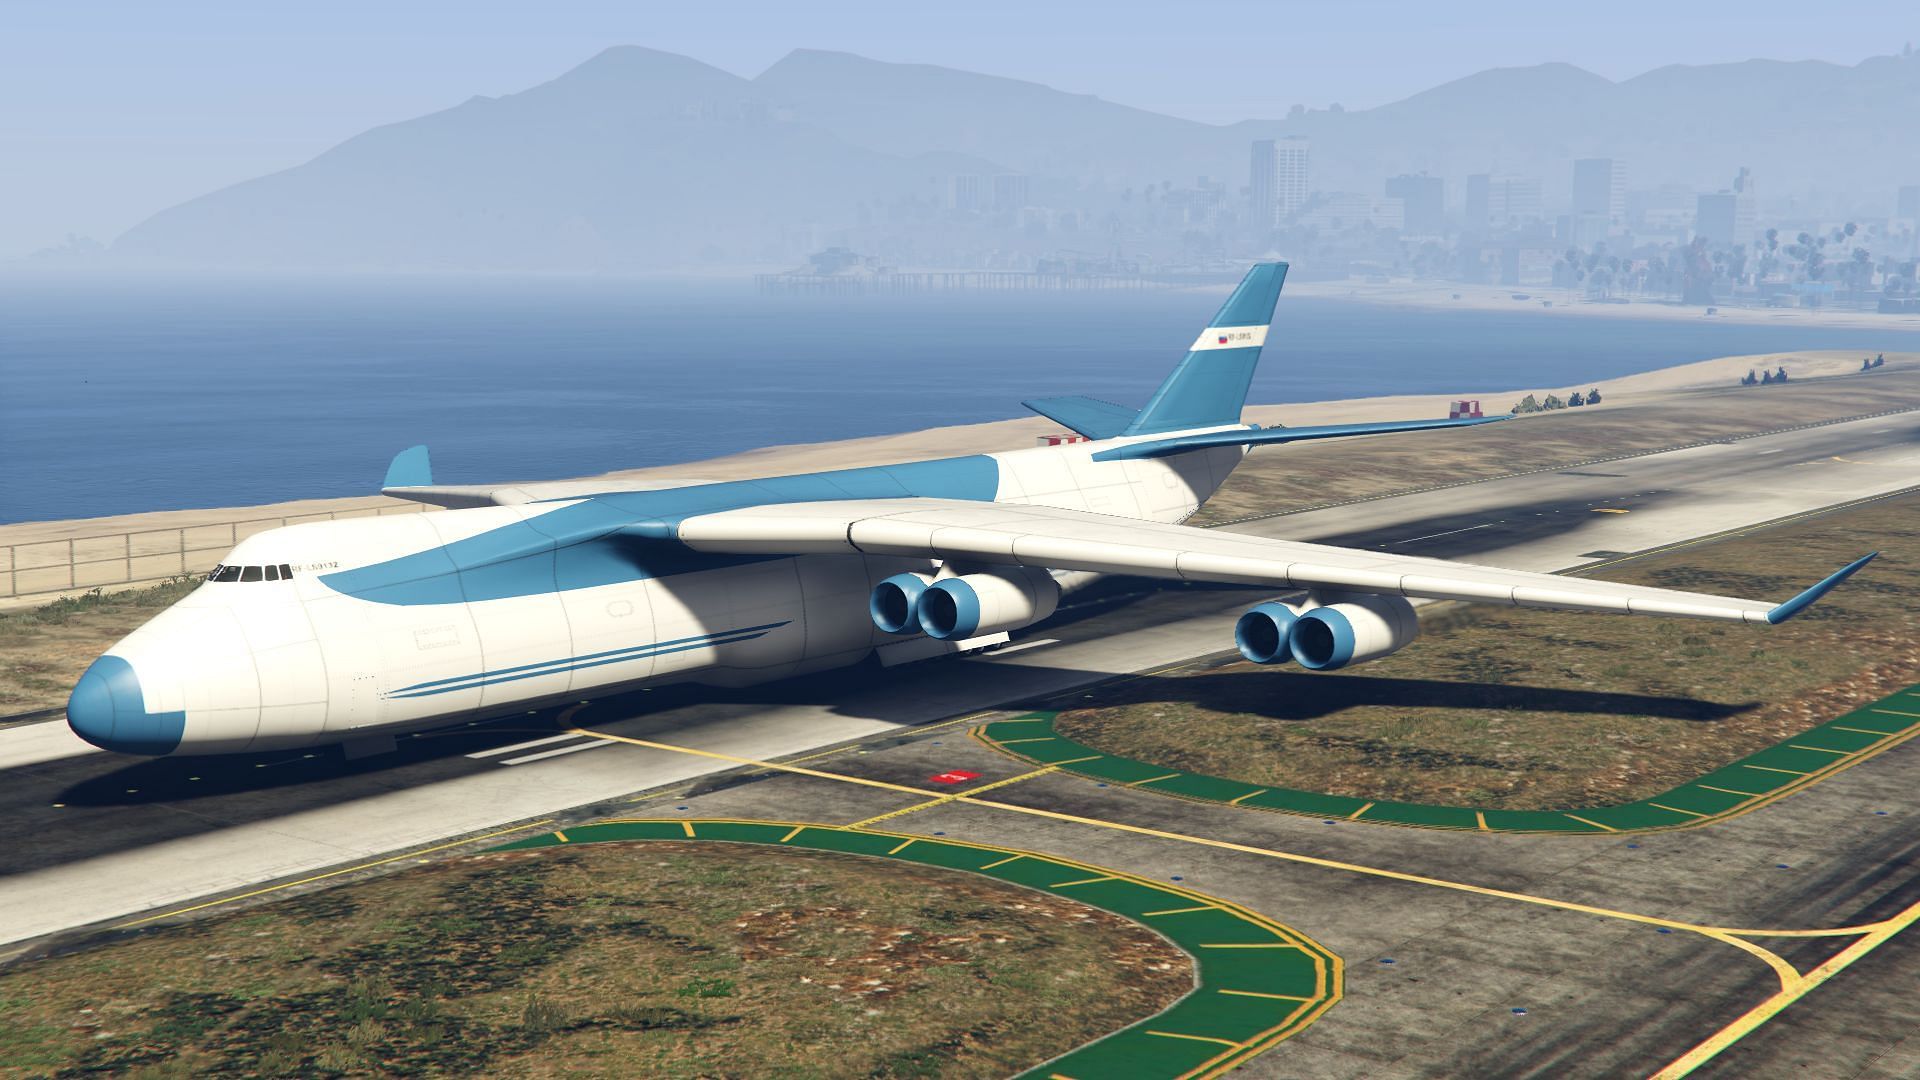 Aircraft spawn locations in GTA Online (Image via Rockstar Games)